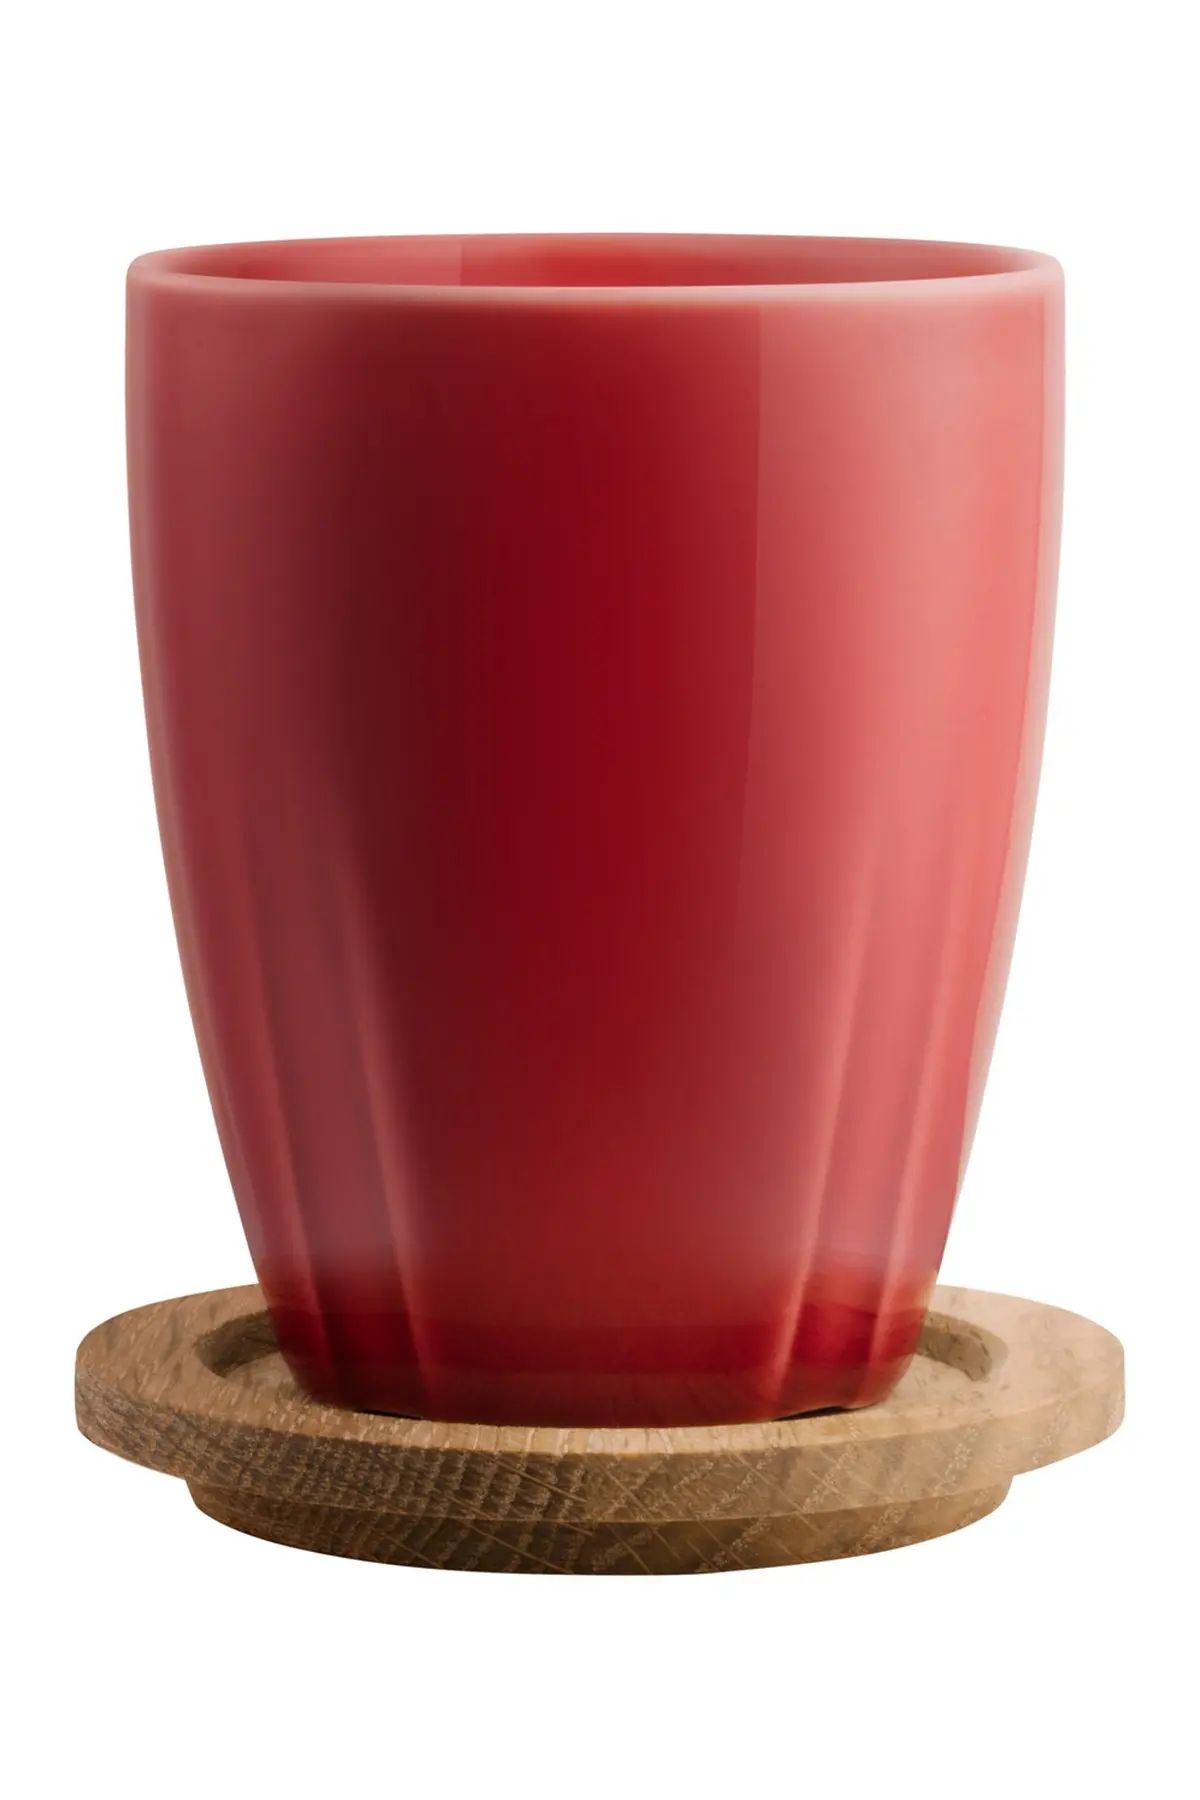 Kosta Boda Bruk Red Mug Oak Lid - Set of 2 at Nordstrom Rack | Nordstrom Rack